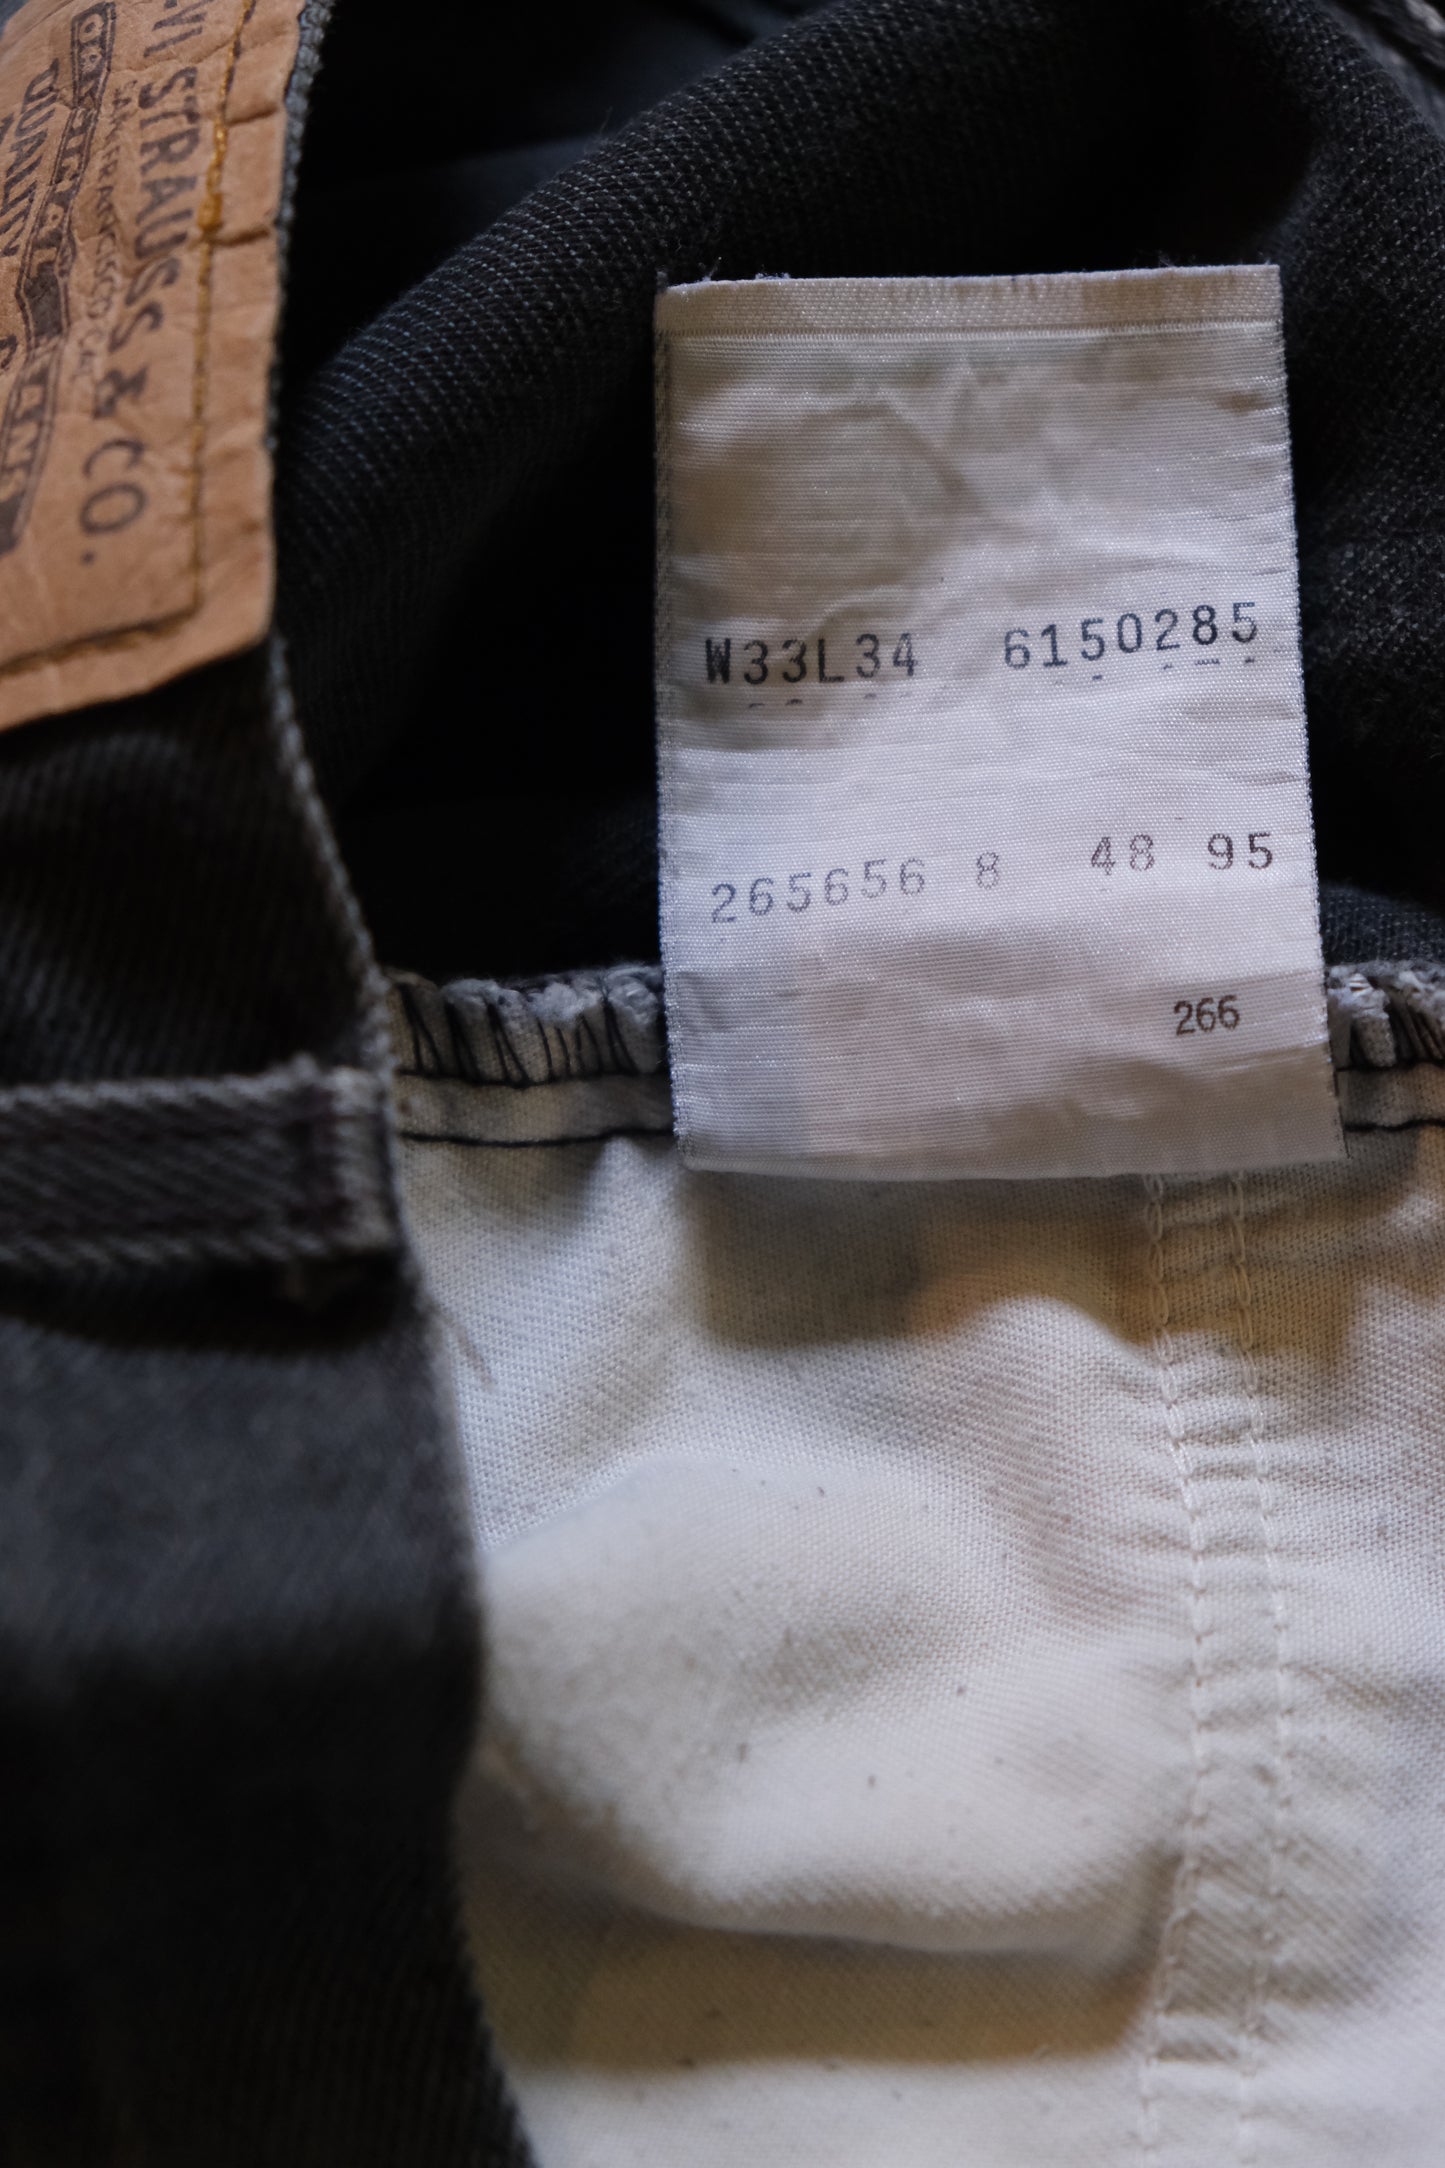 Vintage Levi's 615 orange tab grey jeans w33